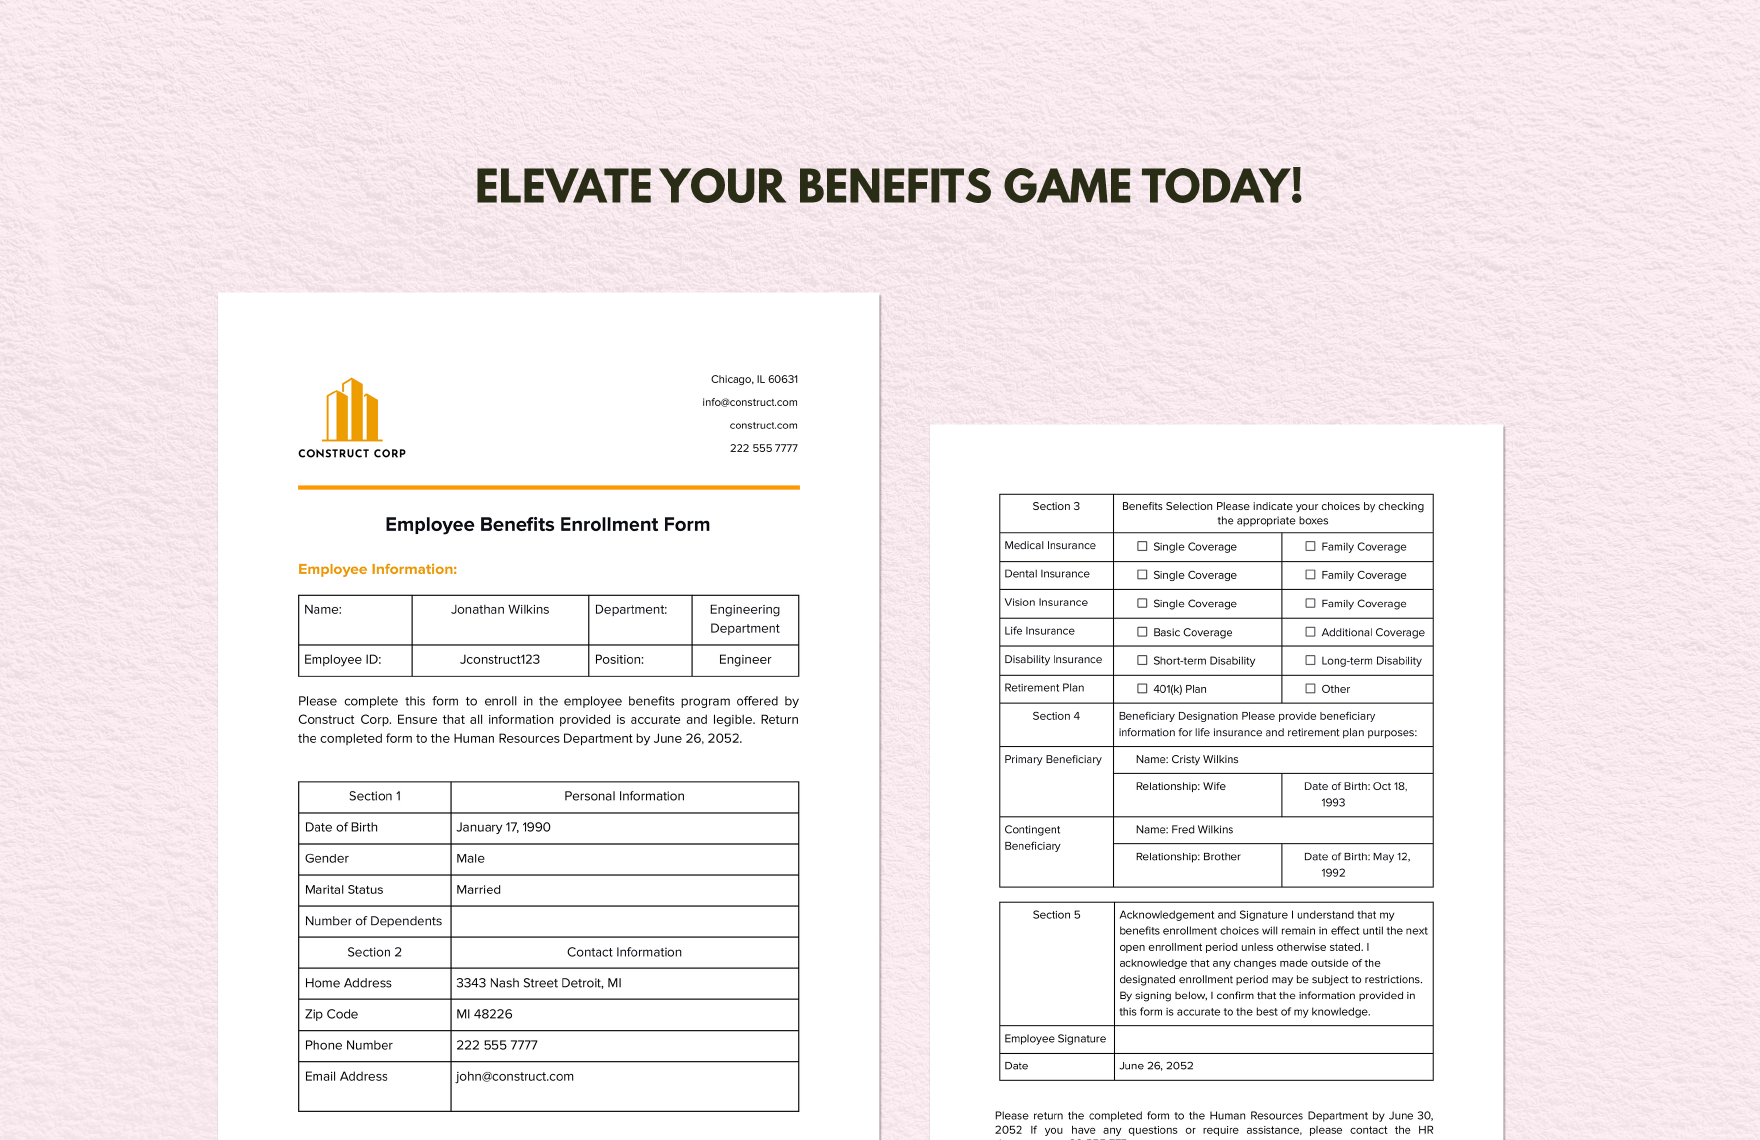 Employee Benefits Enrollment Form in Word, Google Docs - Download ...